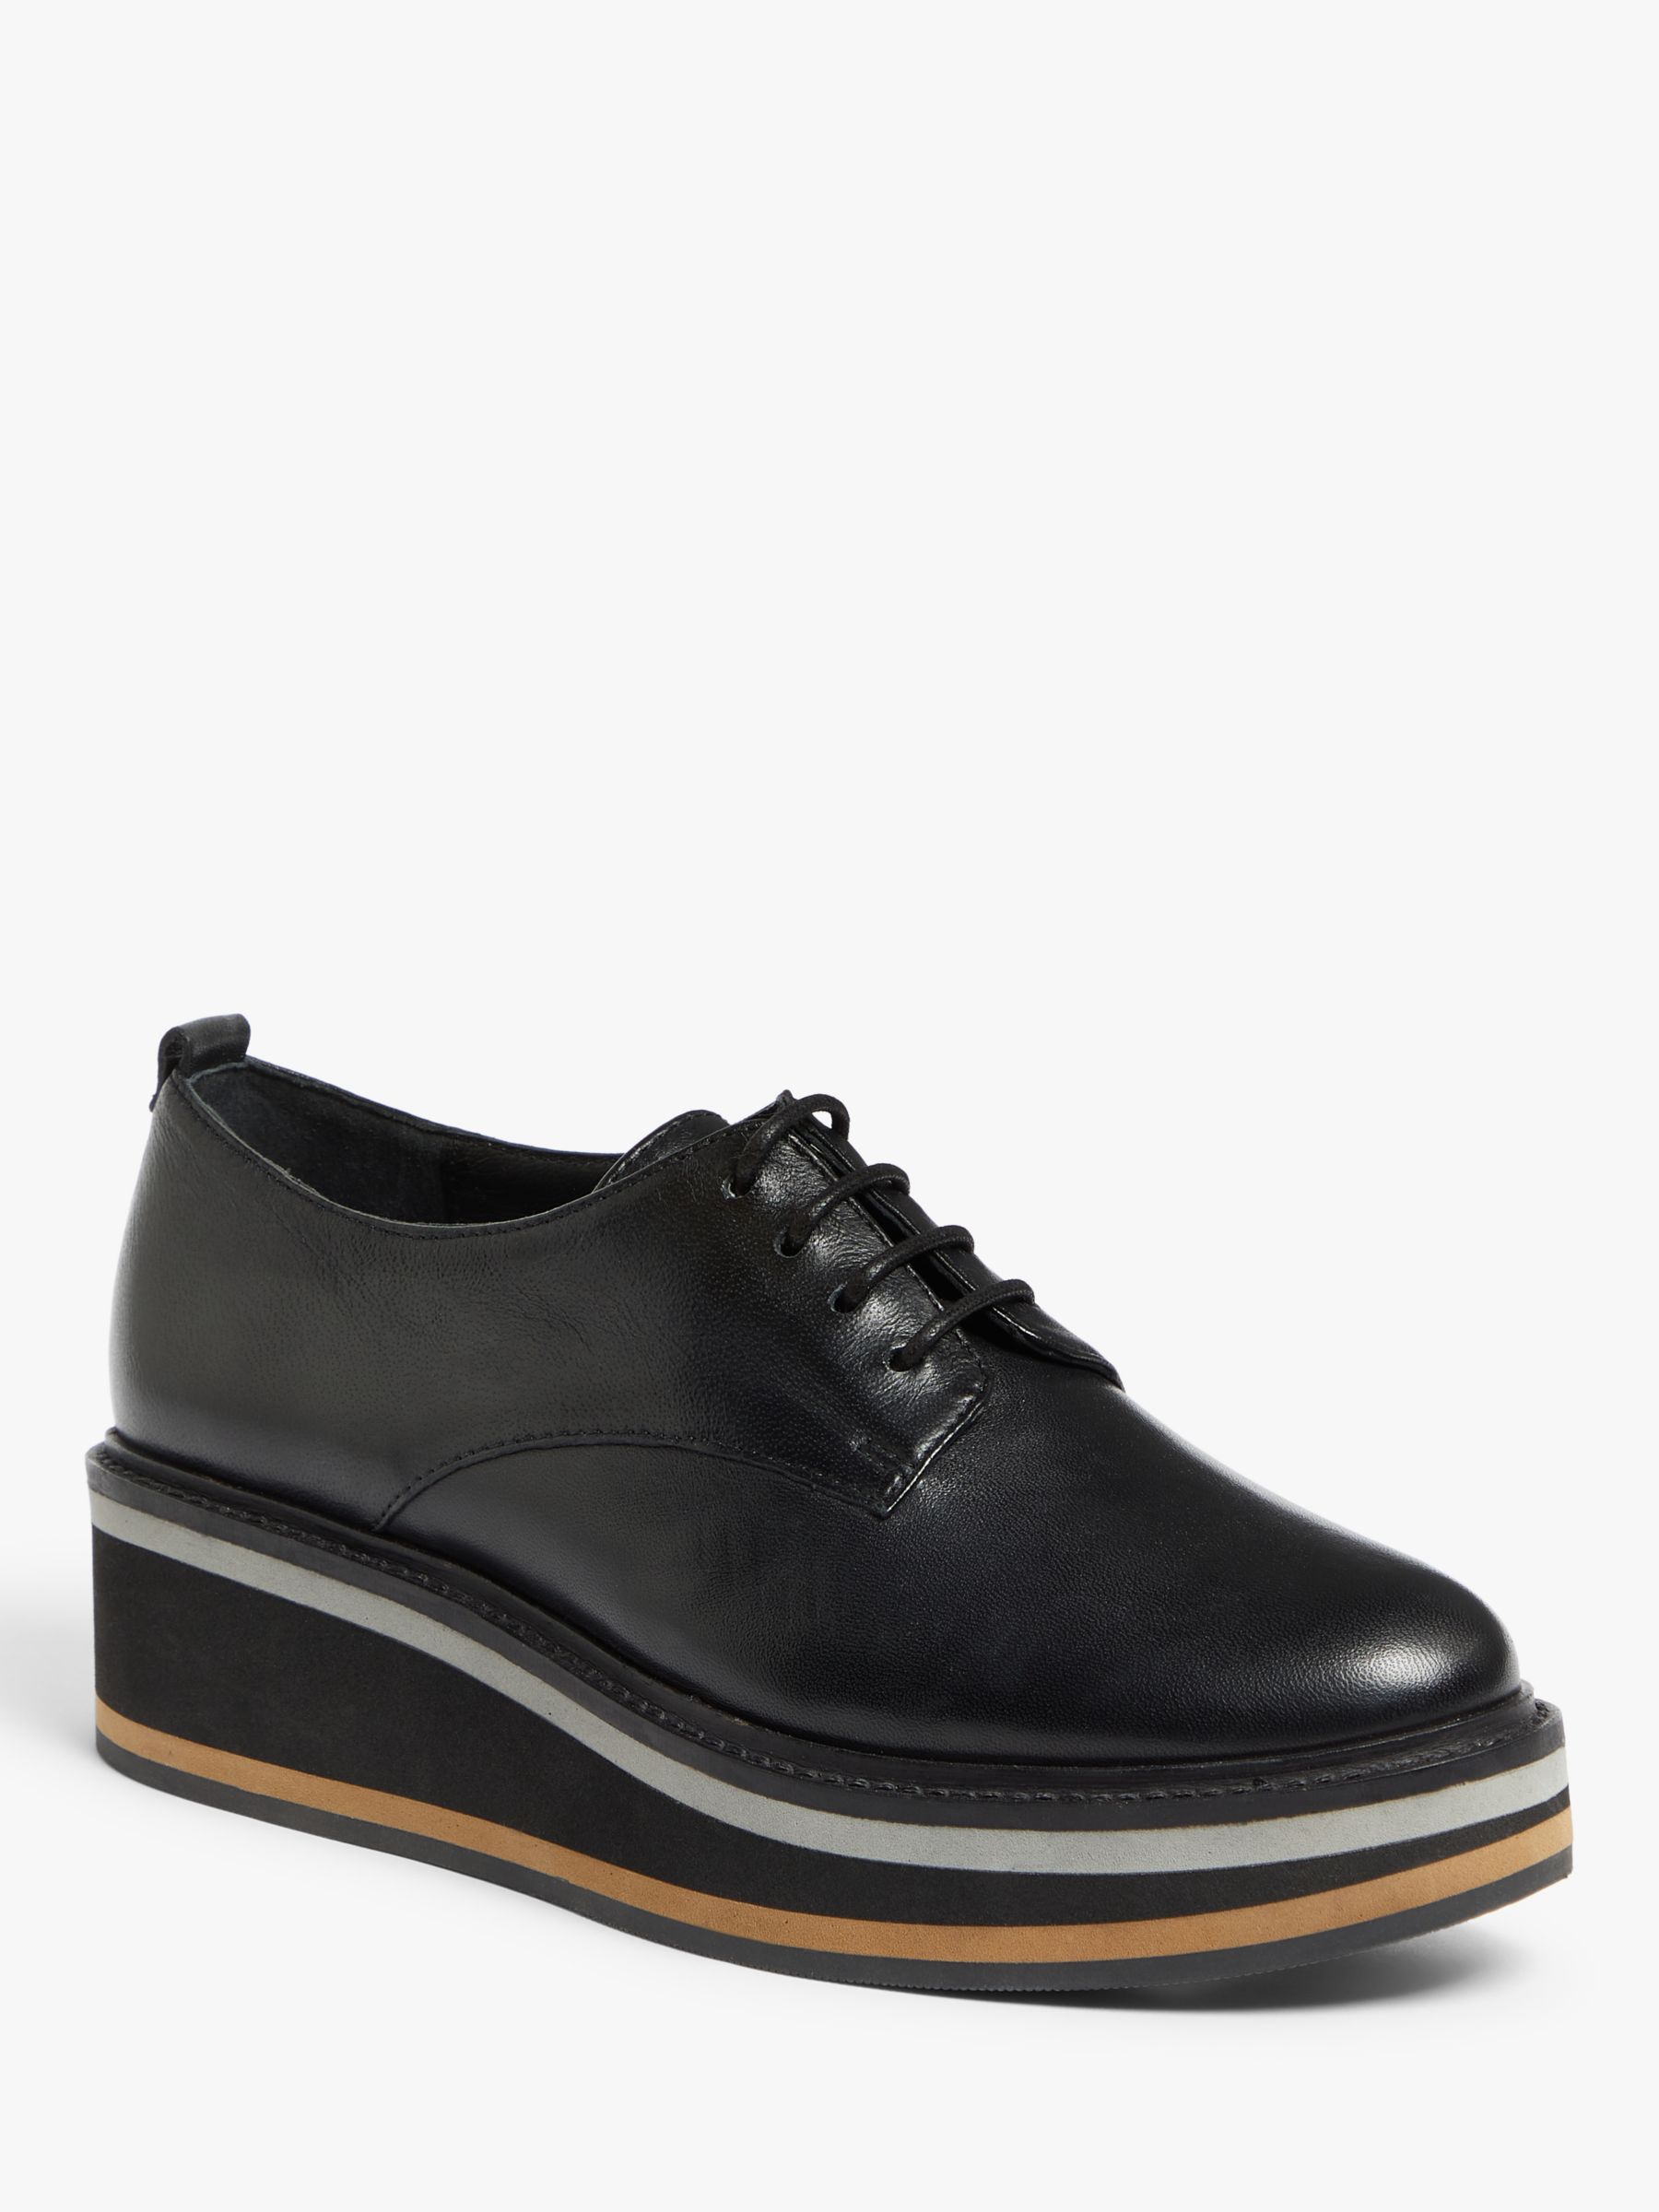 Kin Elisha Leather Flatform Brogue Shoes, Black at John Lewis & Partners